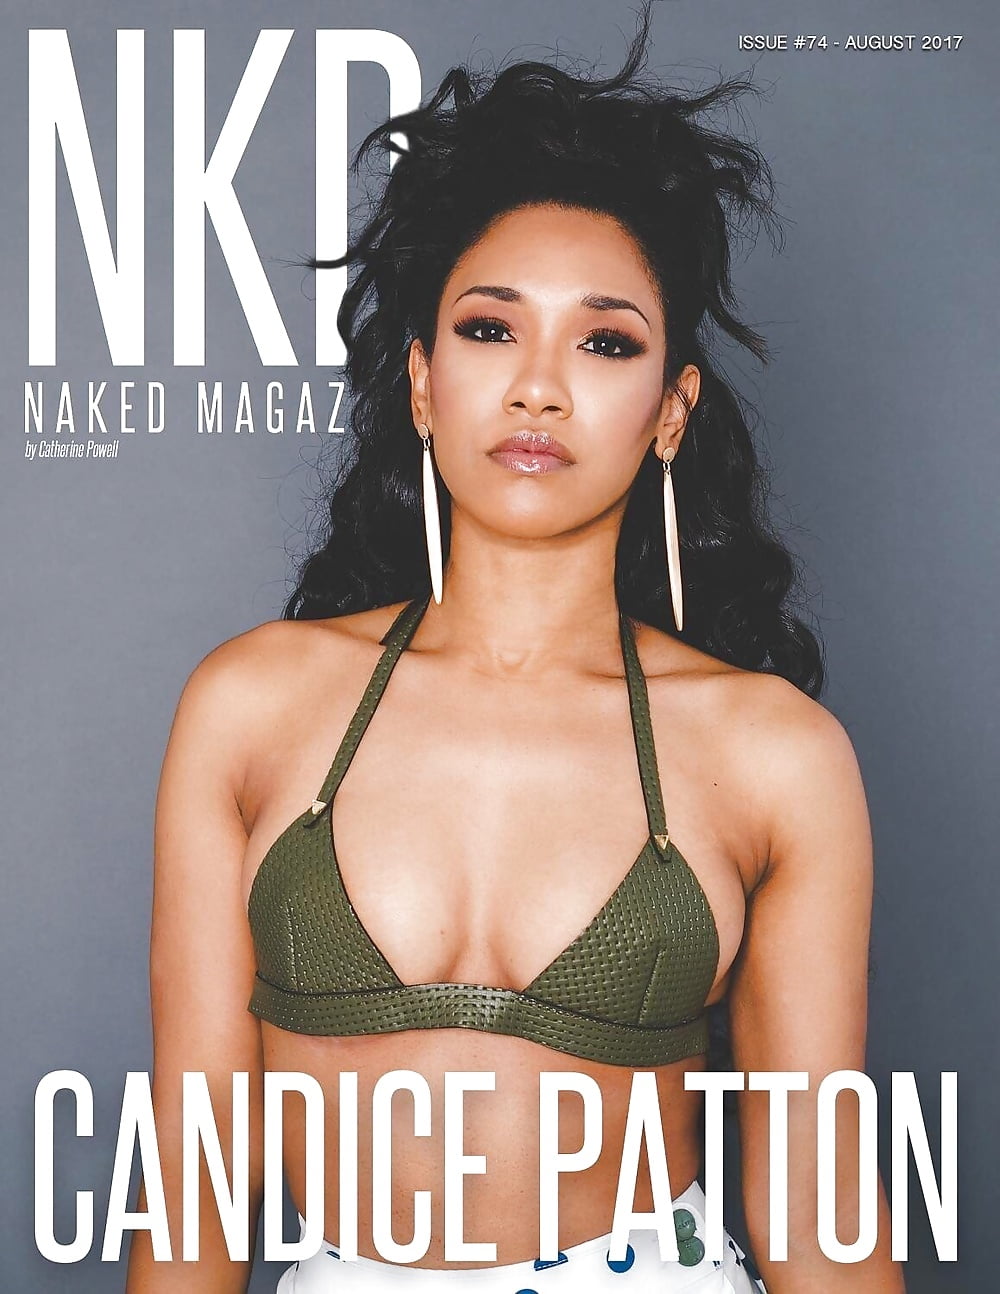 Candice patton naked pics